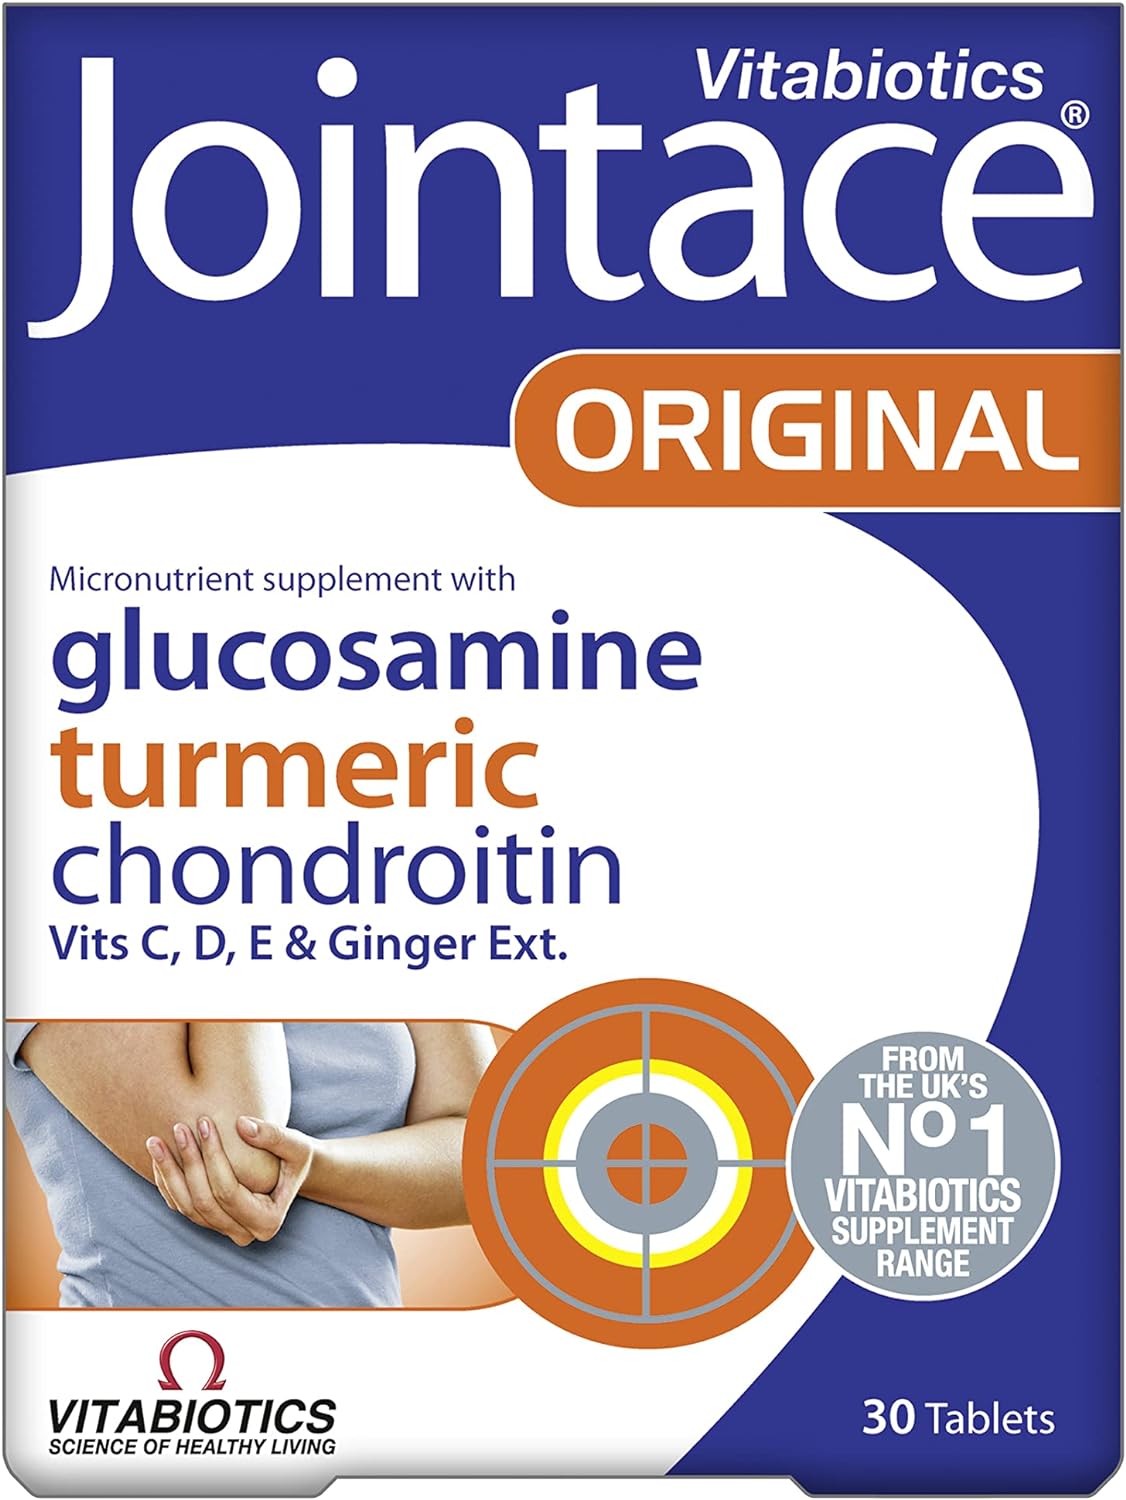 Vitabiotics Jointace Glucosamine & Chondroitin 30 Tablets